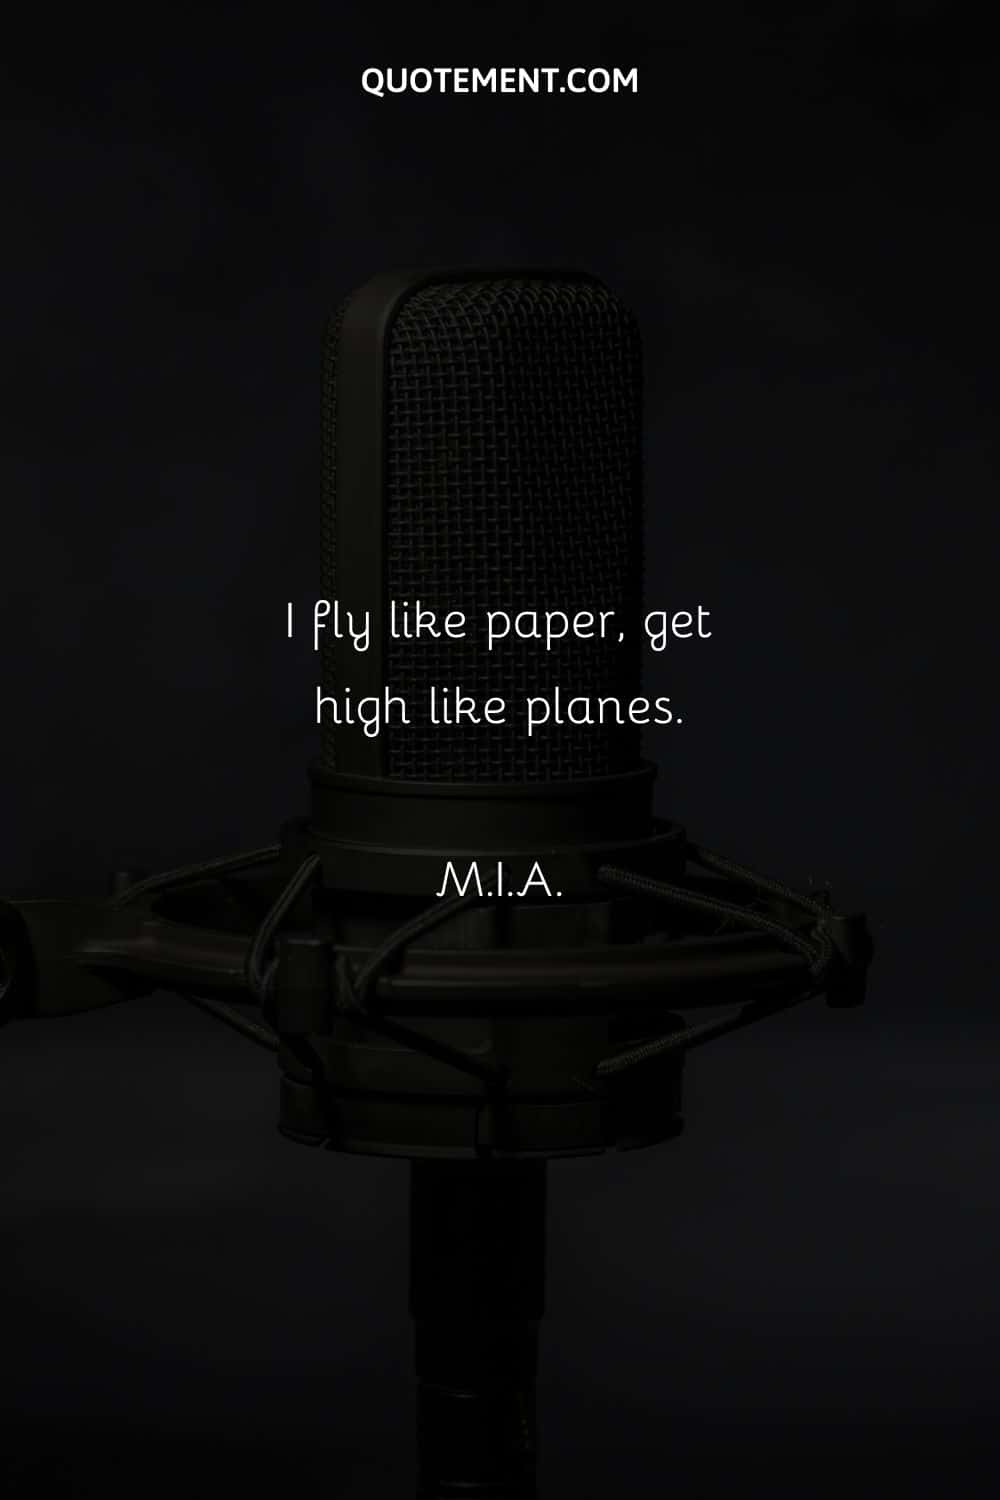  I fly like paper, get high like planes